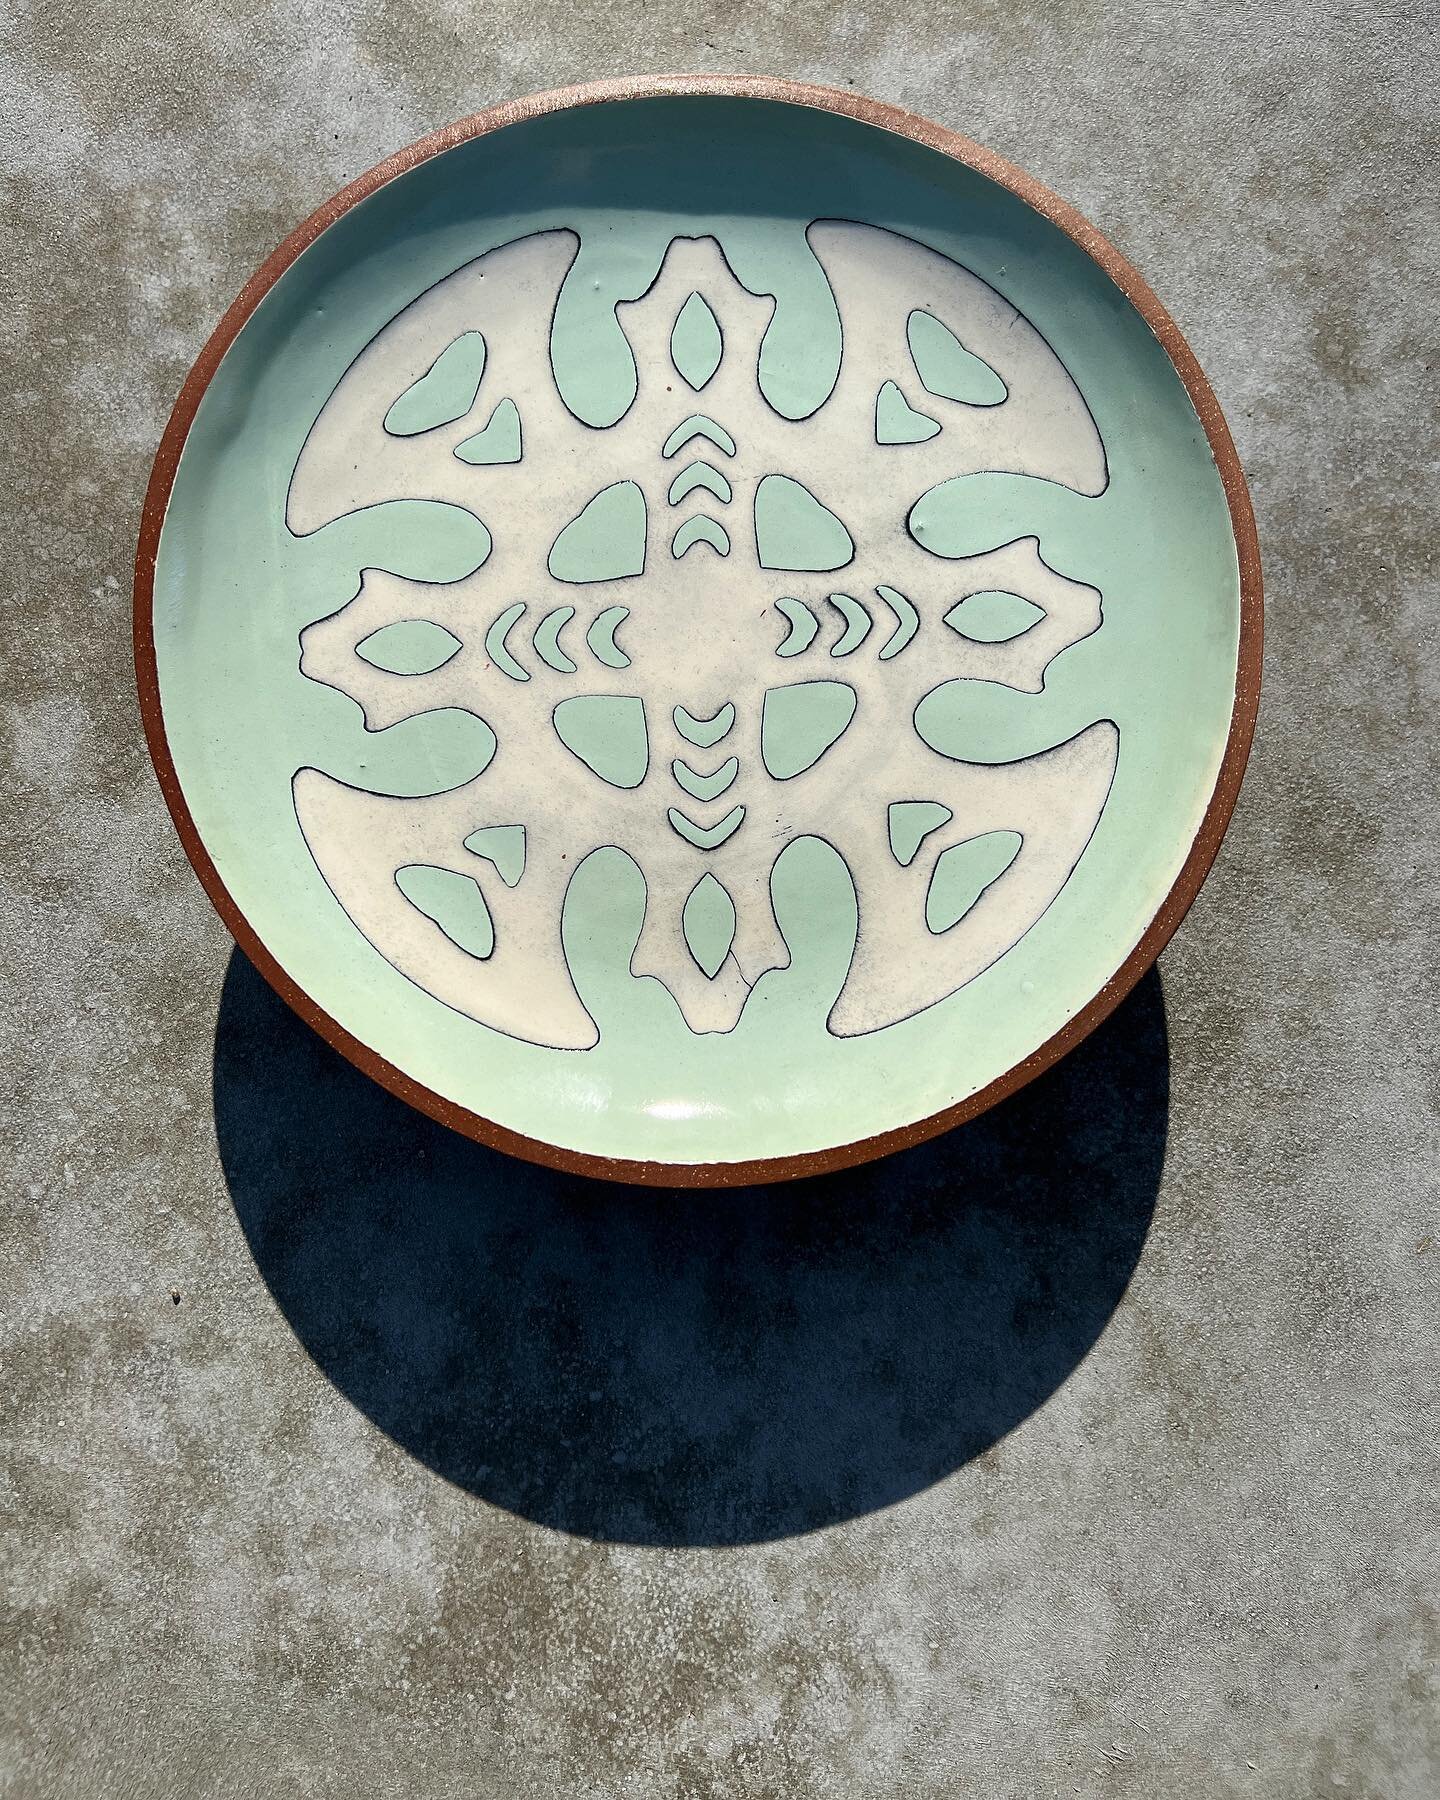 Finished platter. 
.
.
.
#ceramic #ceramicart #graphicclay #coloredslip #functionalceramics #ceramicart #ceramic #stoneware #handmade #handmadepottery #studiopottery #craft #tableart #tableware #printonclay #graphicclay #americancraft #contemporaryce